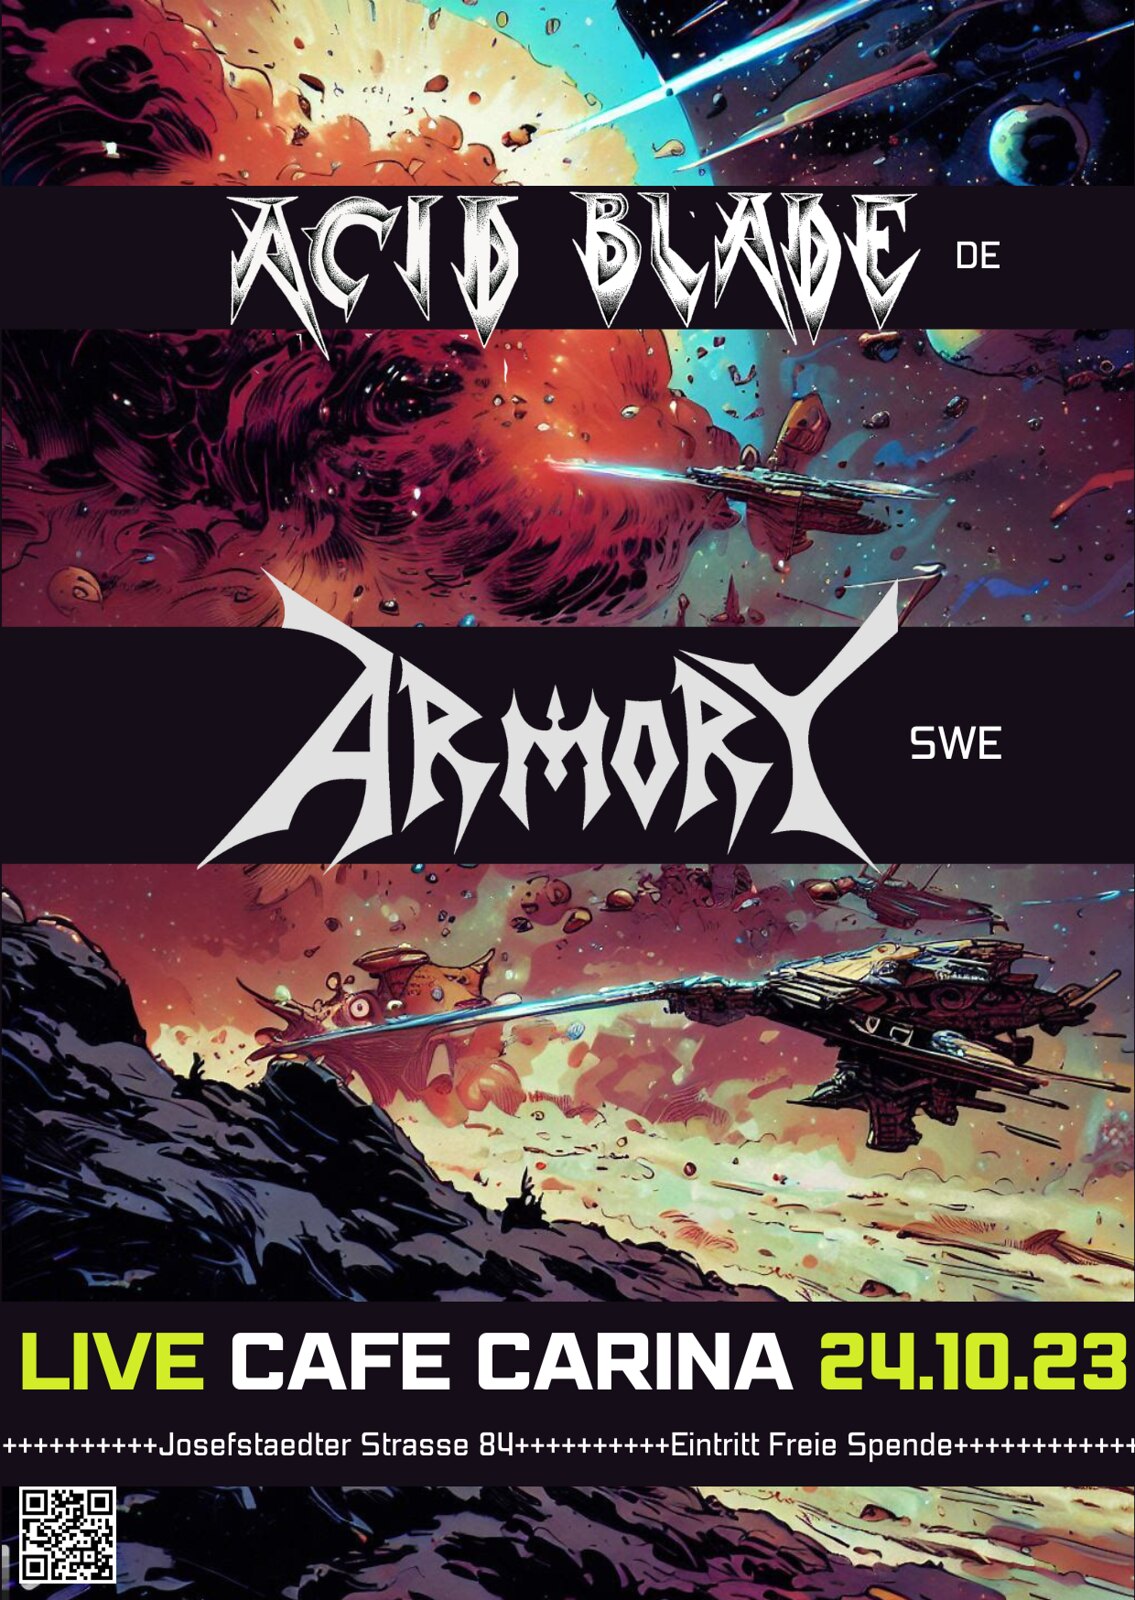 ARMORY – SPEED METAL AUS SCHWEDEN / ACID BLADE – HEAVY METAL AUS DRESDEN am 24. October 2023 @ Café Carina.